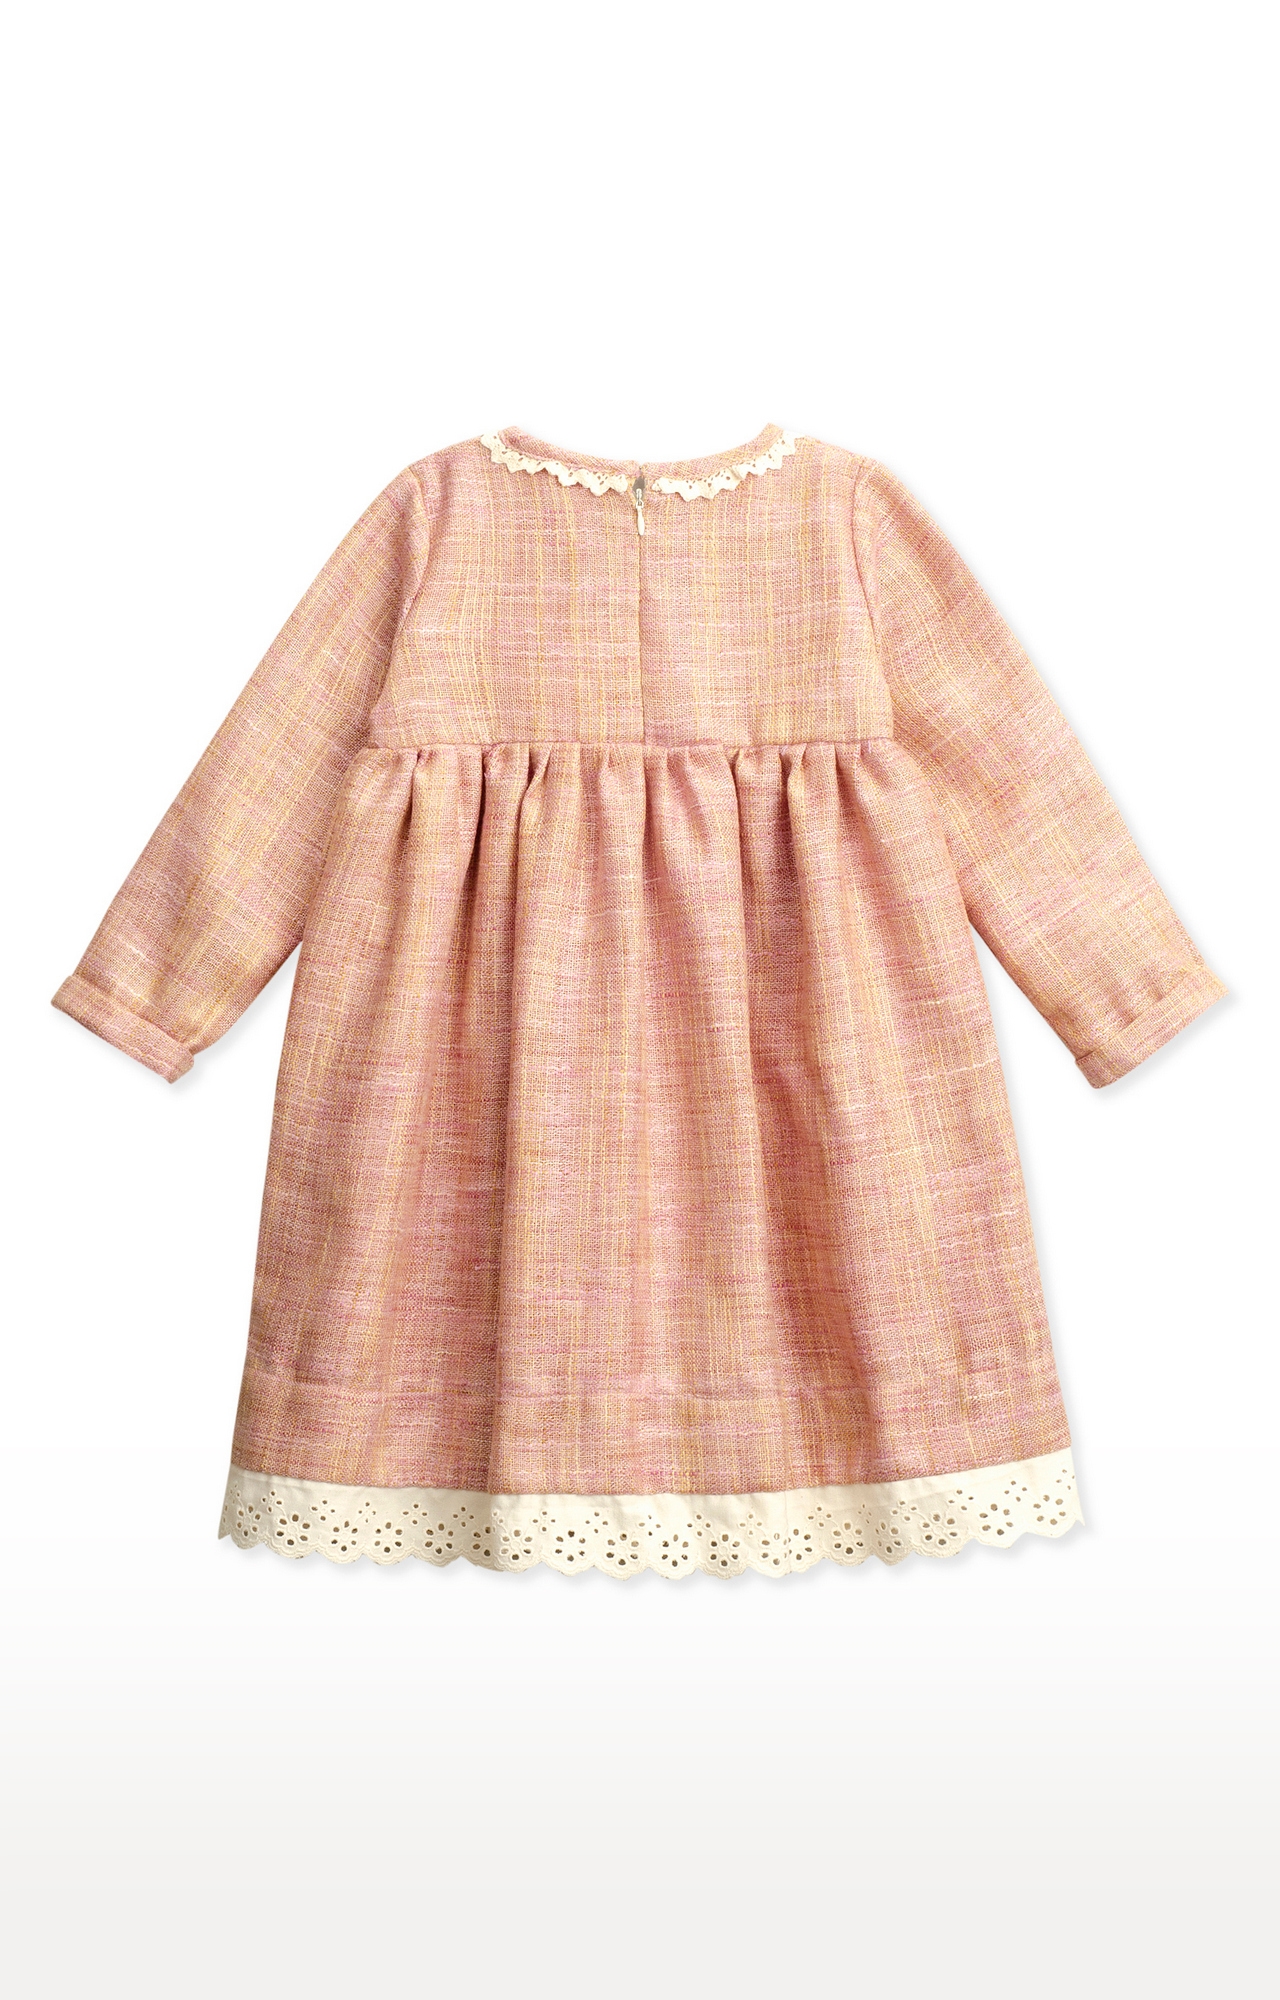 Popsicles Clothing | Popsicles Girls Handloom Cotton Slush Dress - Pink (1-2 Years) 1